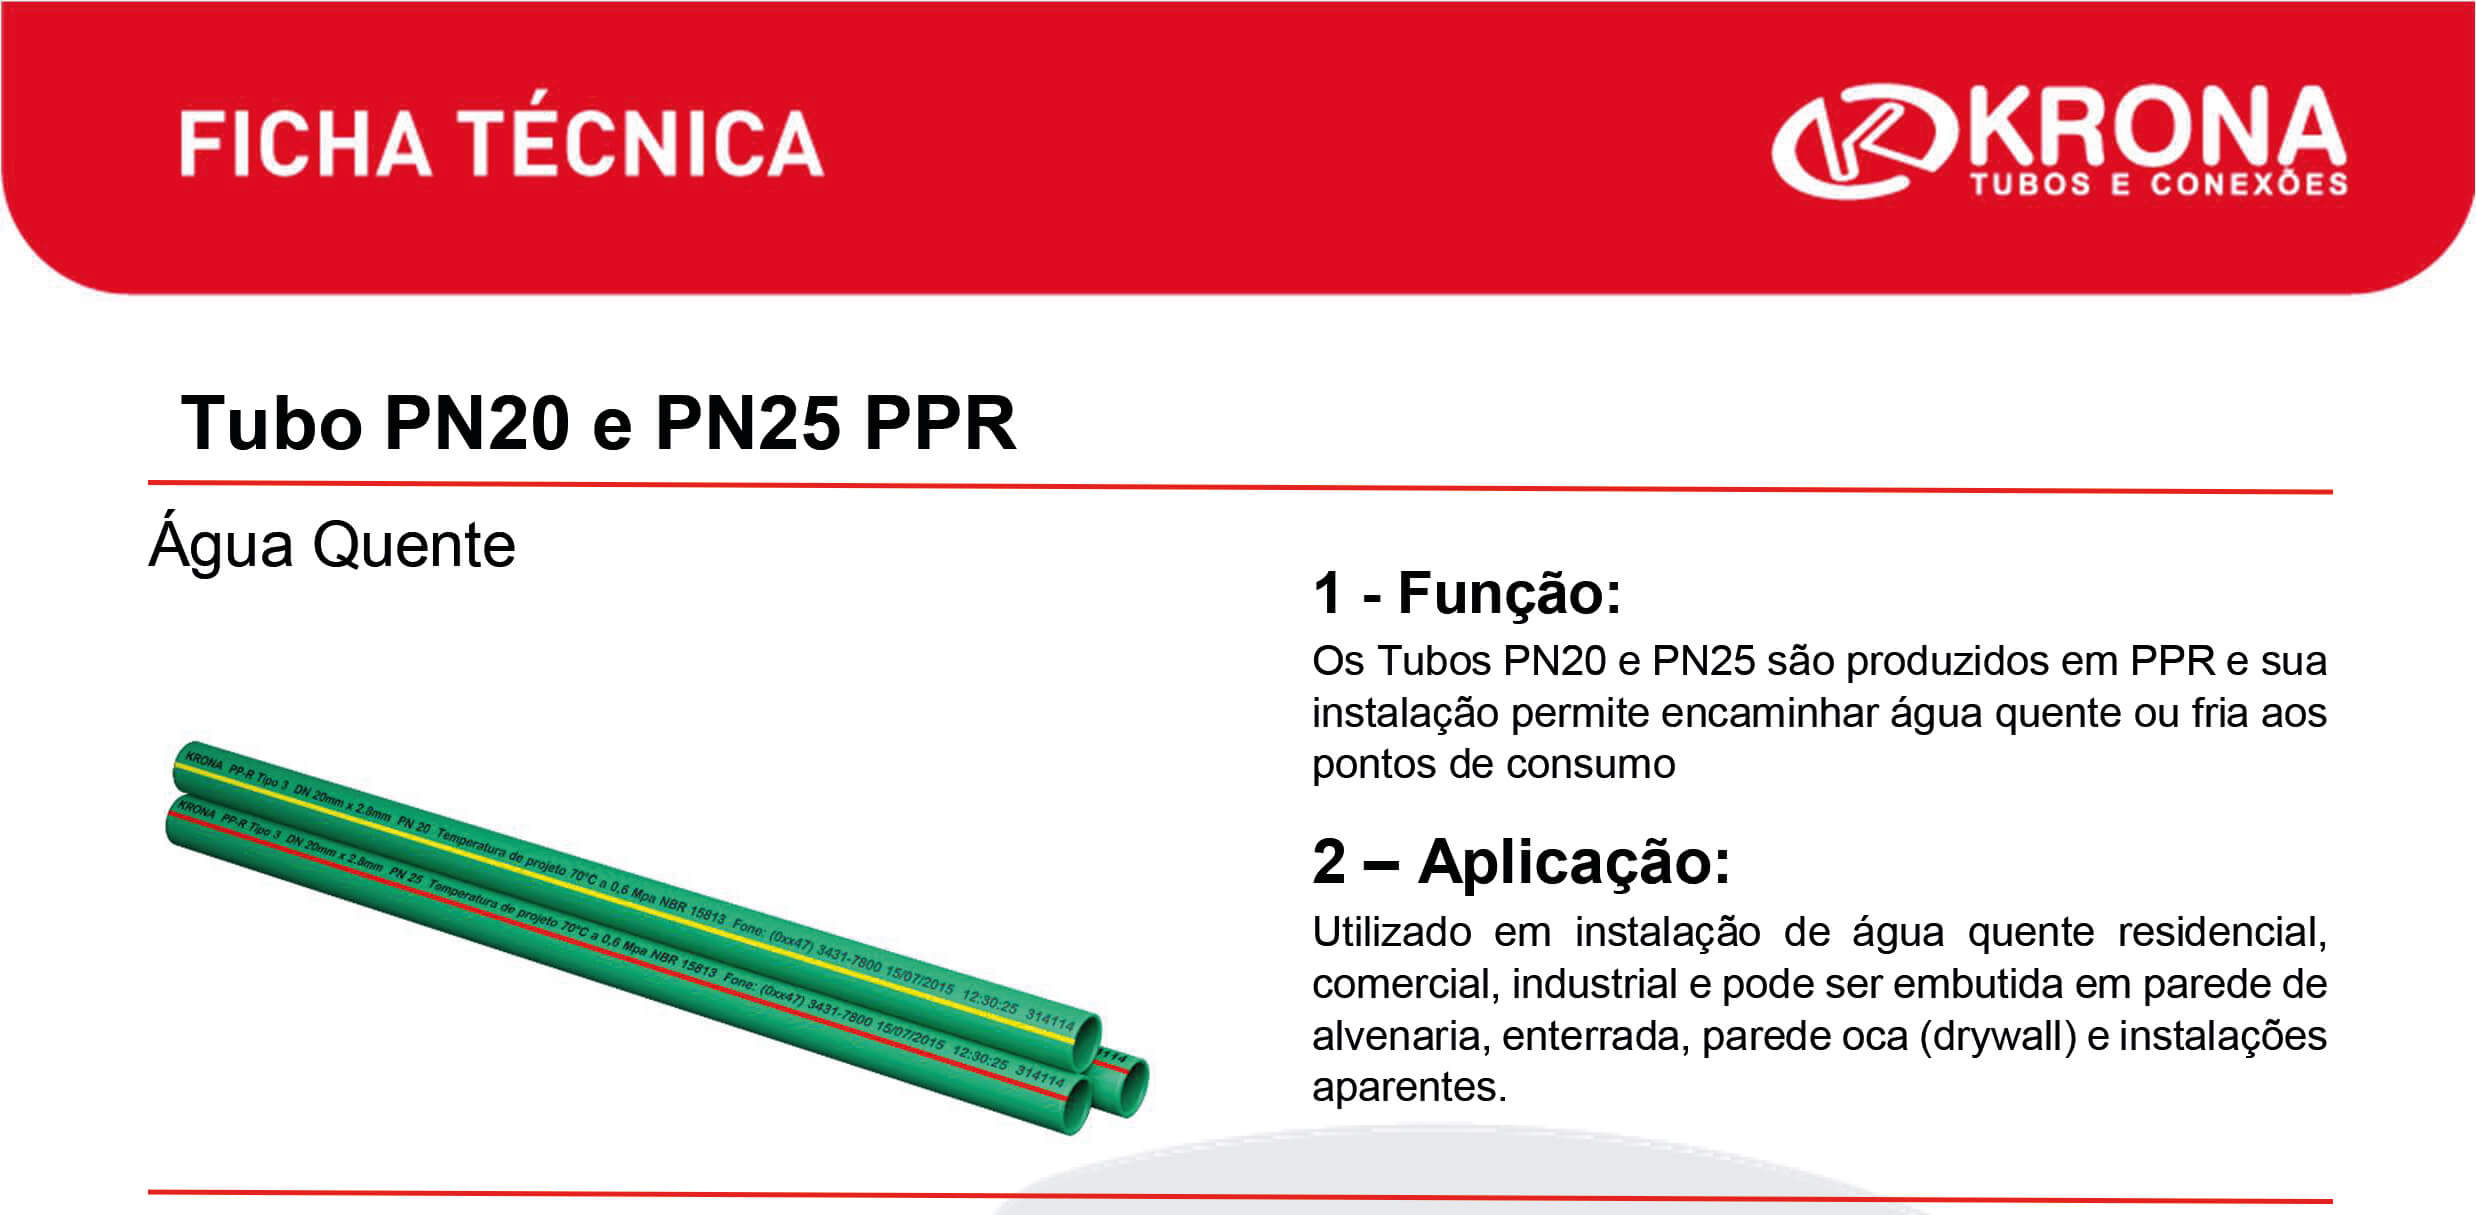 Ficha Técnica – Tubo PN20 e PN25 PPR